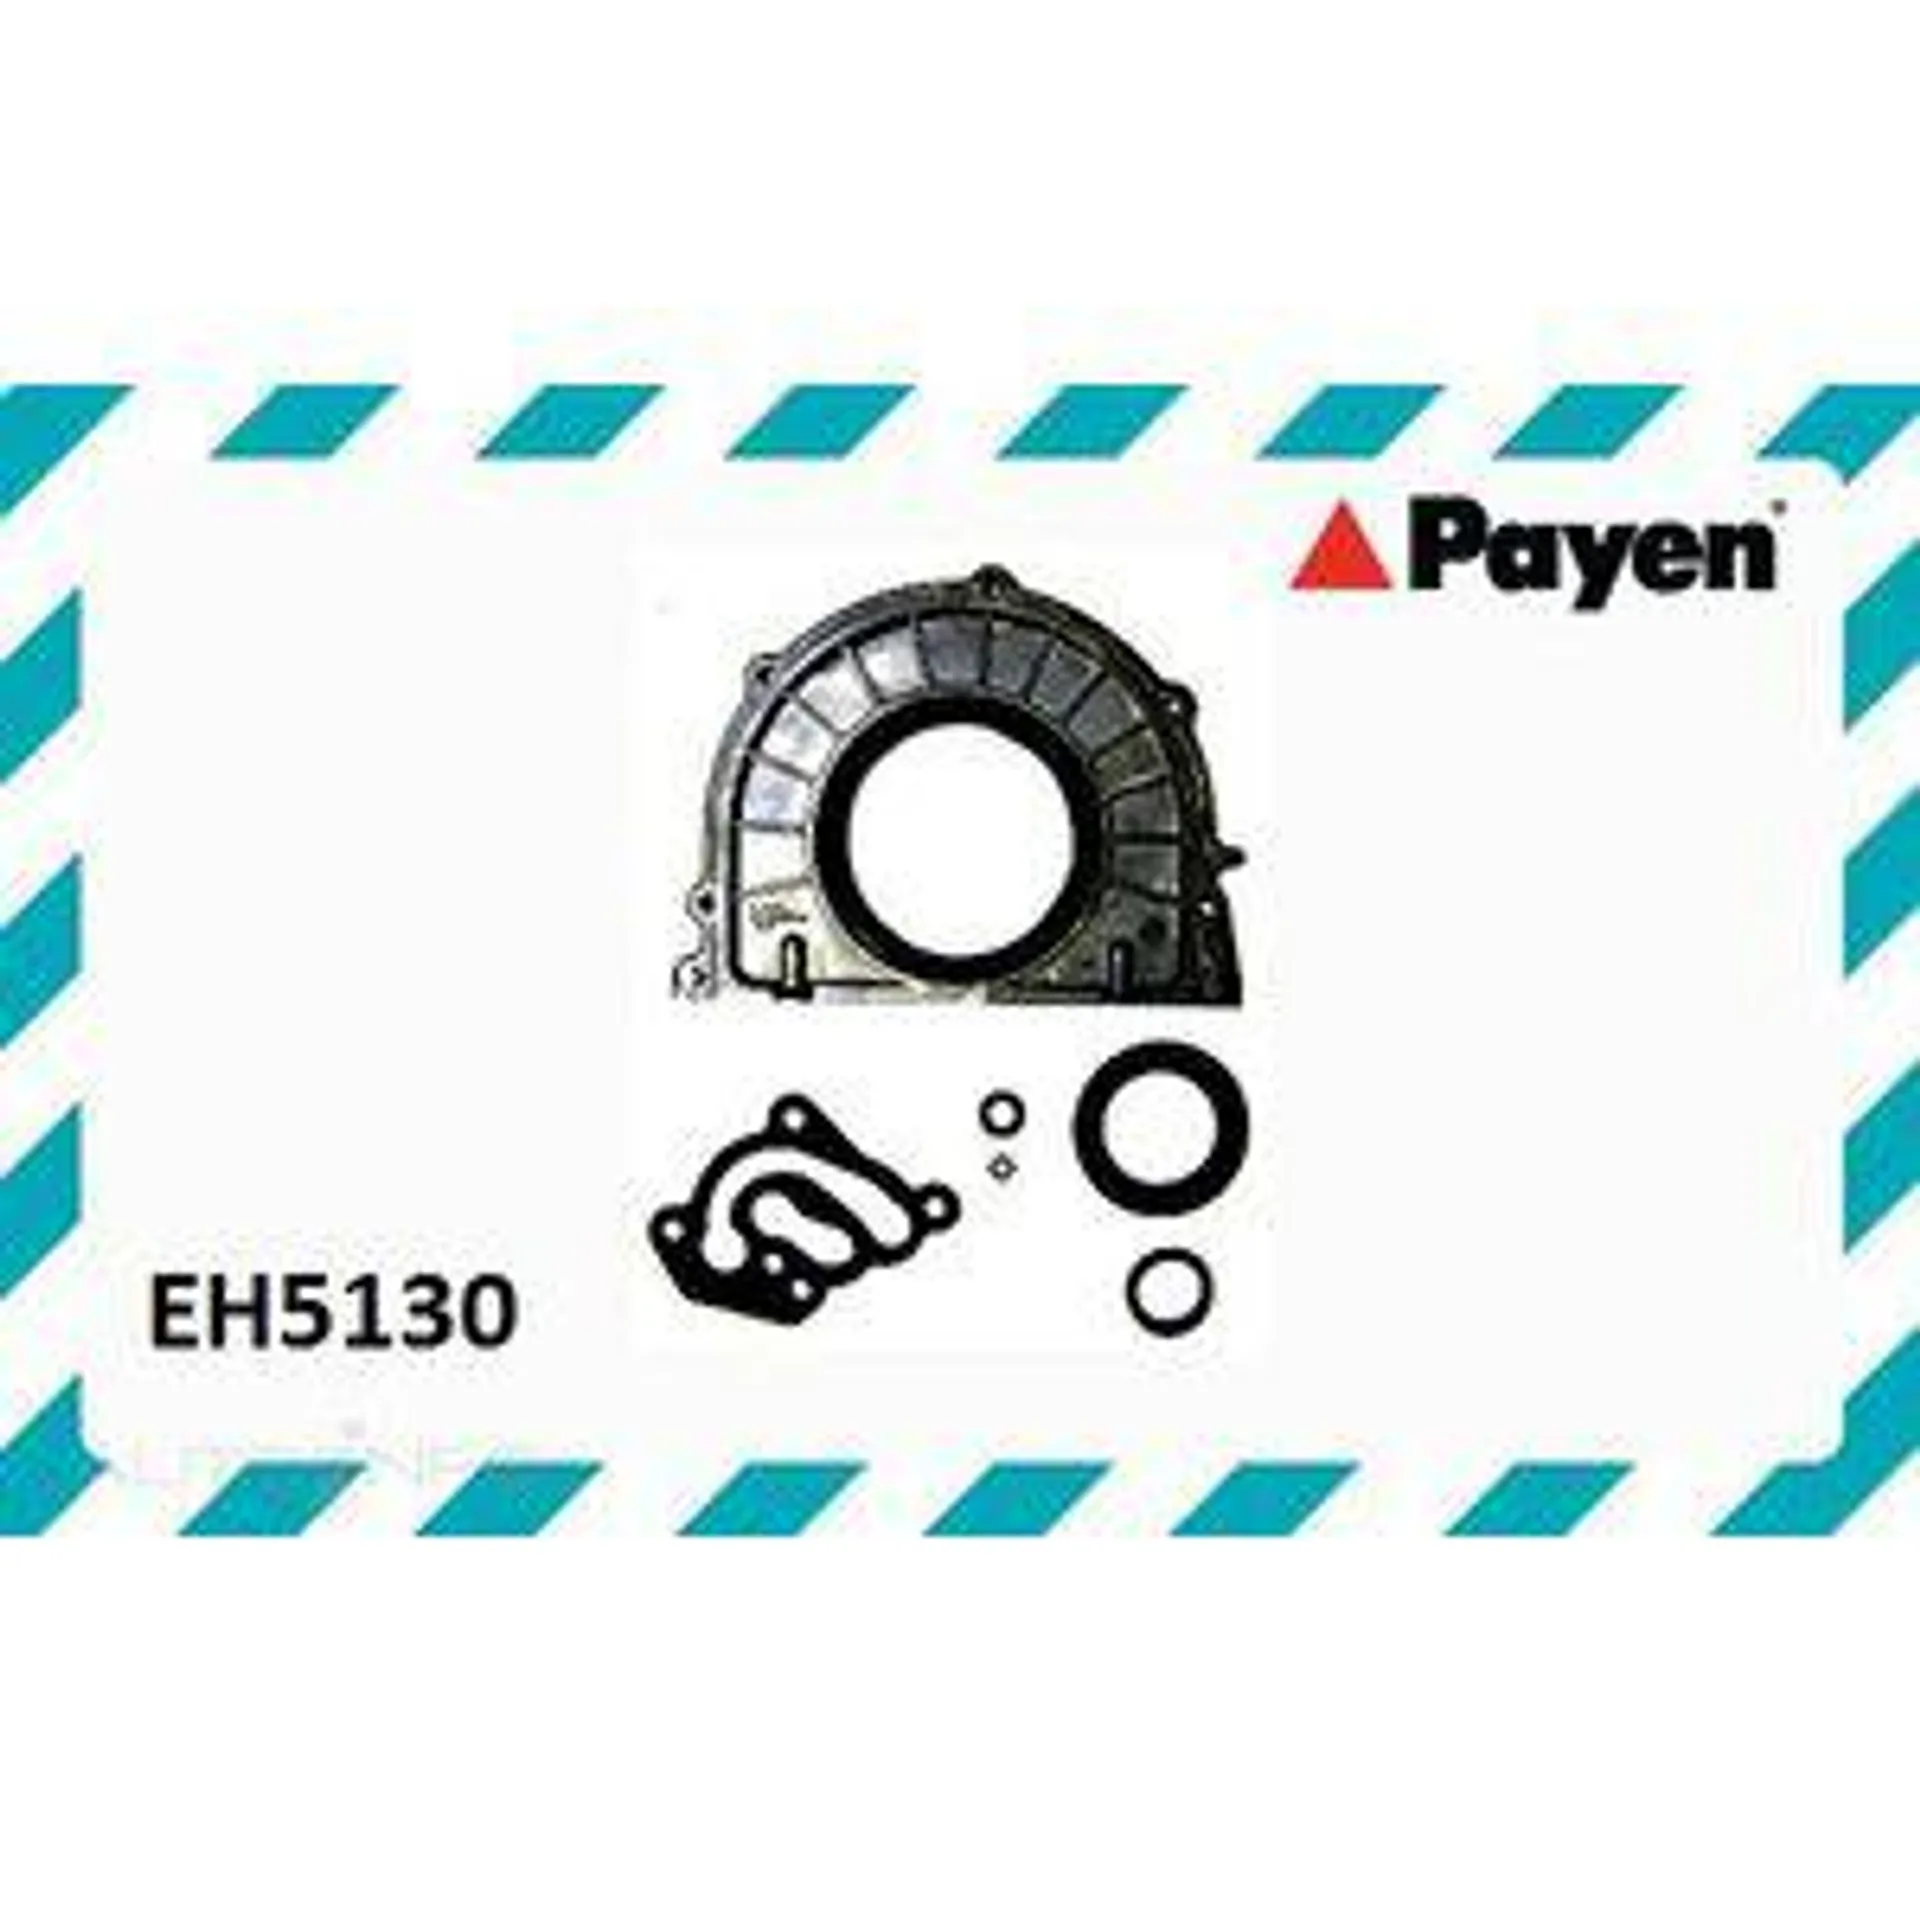 Payen Gaskets Conversion Gasket Set - EH5130